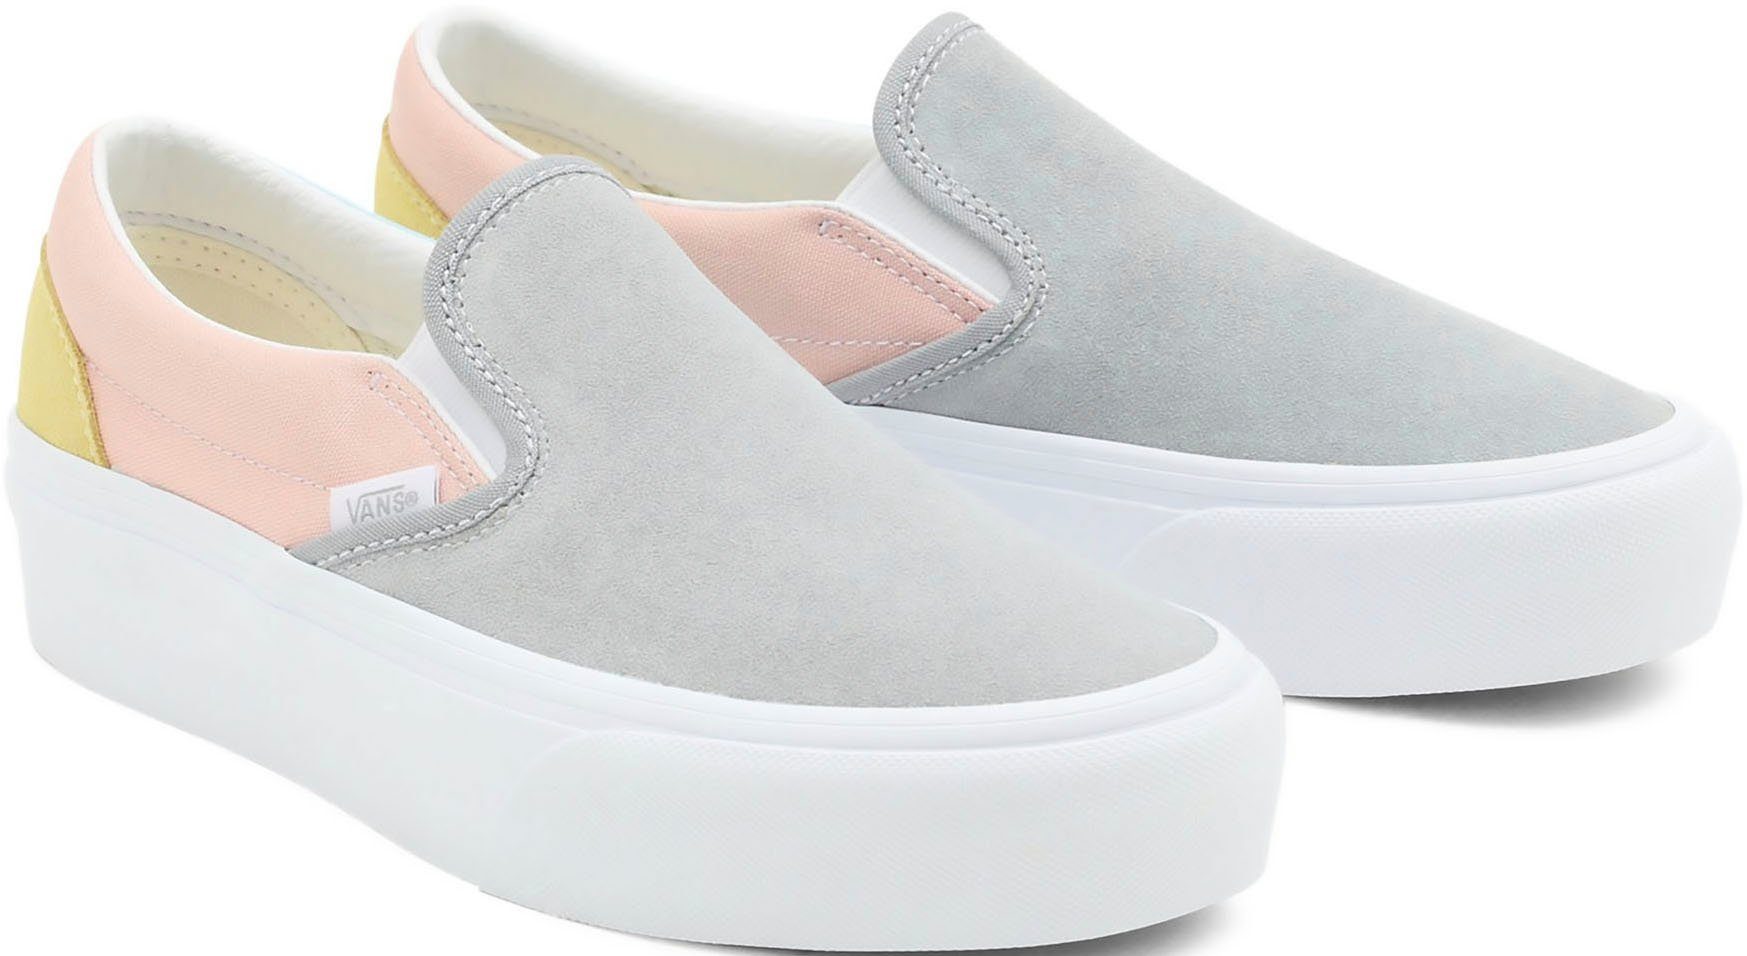 Vans Plateau-Sneaker online kaufen | OTTO